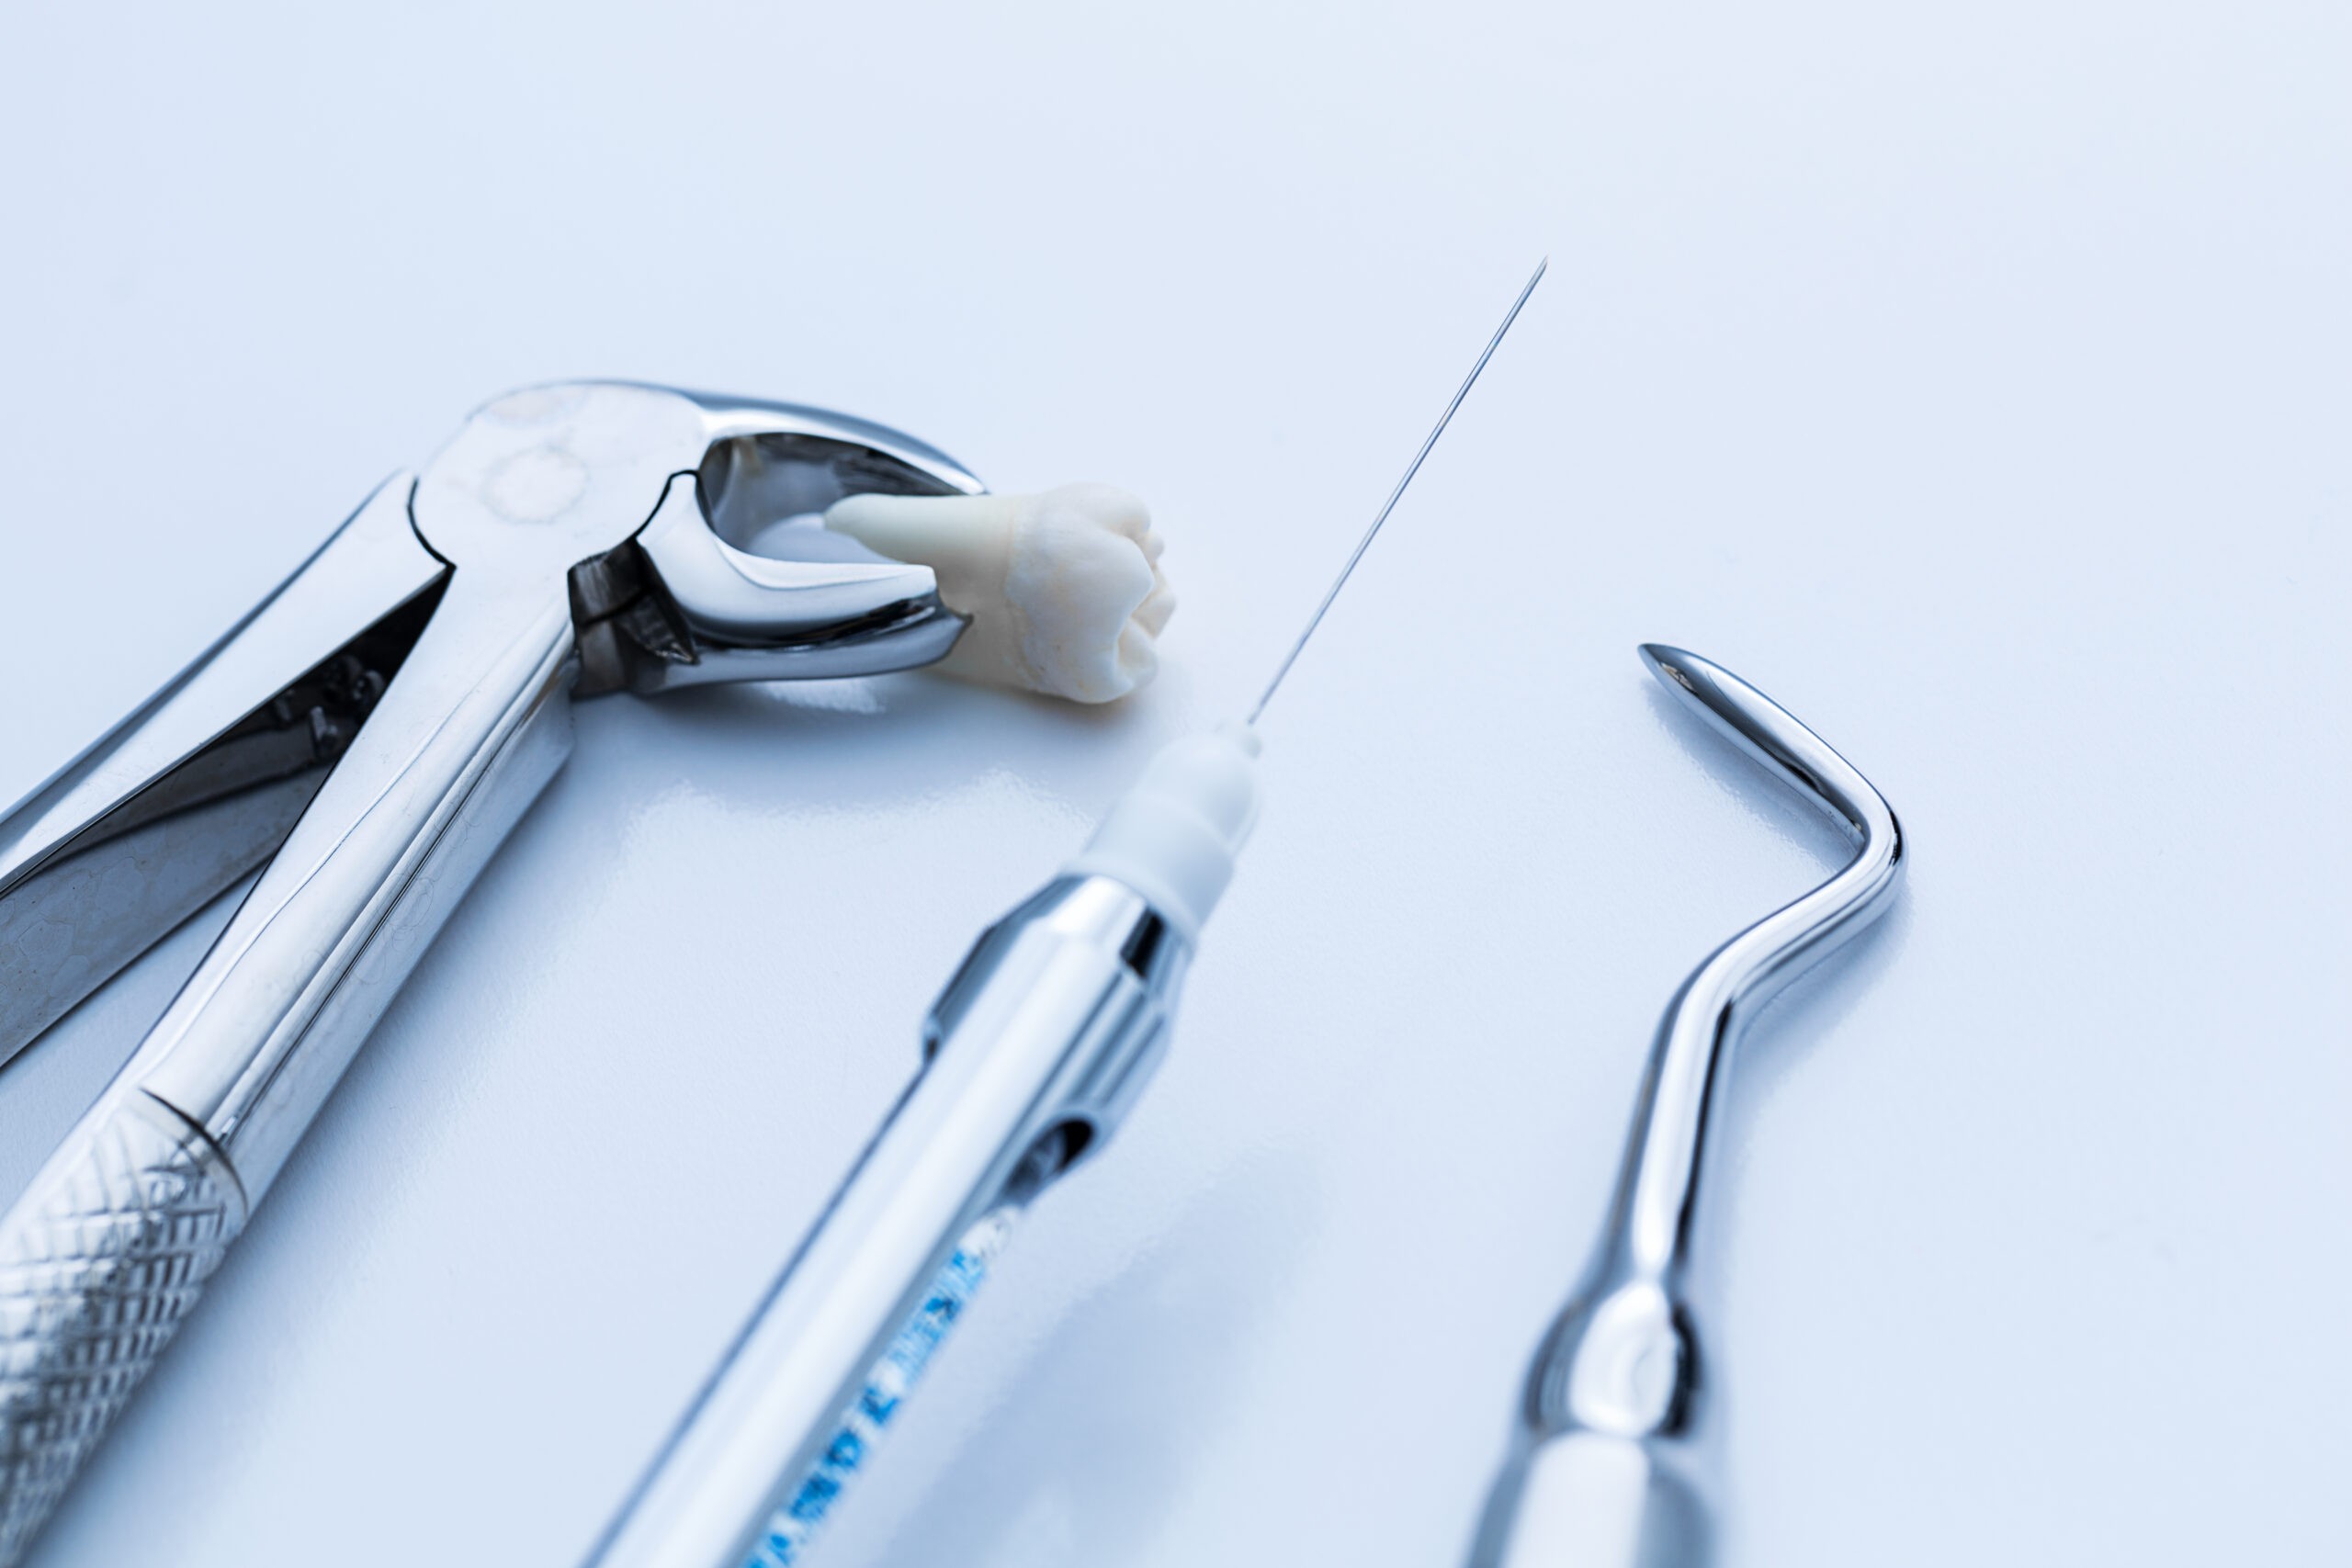 Iv dental sedation chattanooga periodontics dental implants